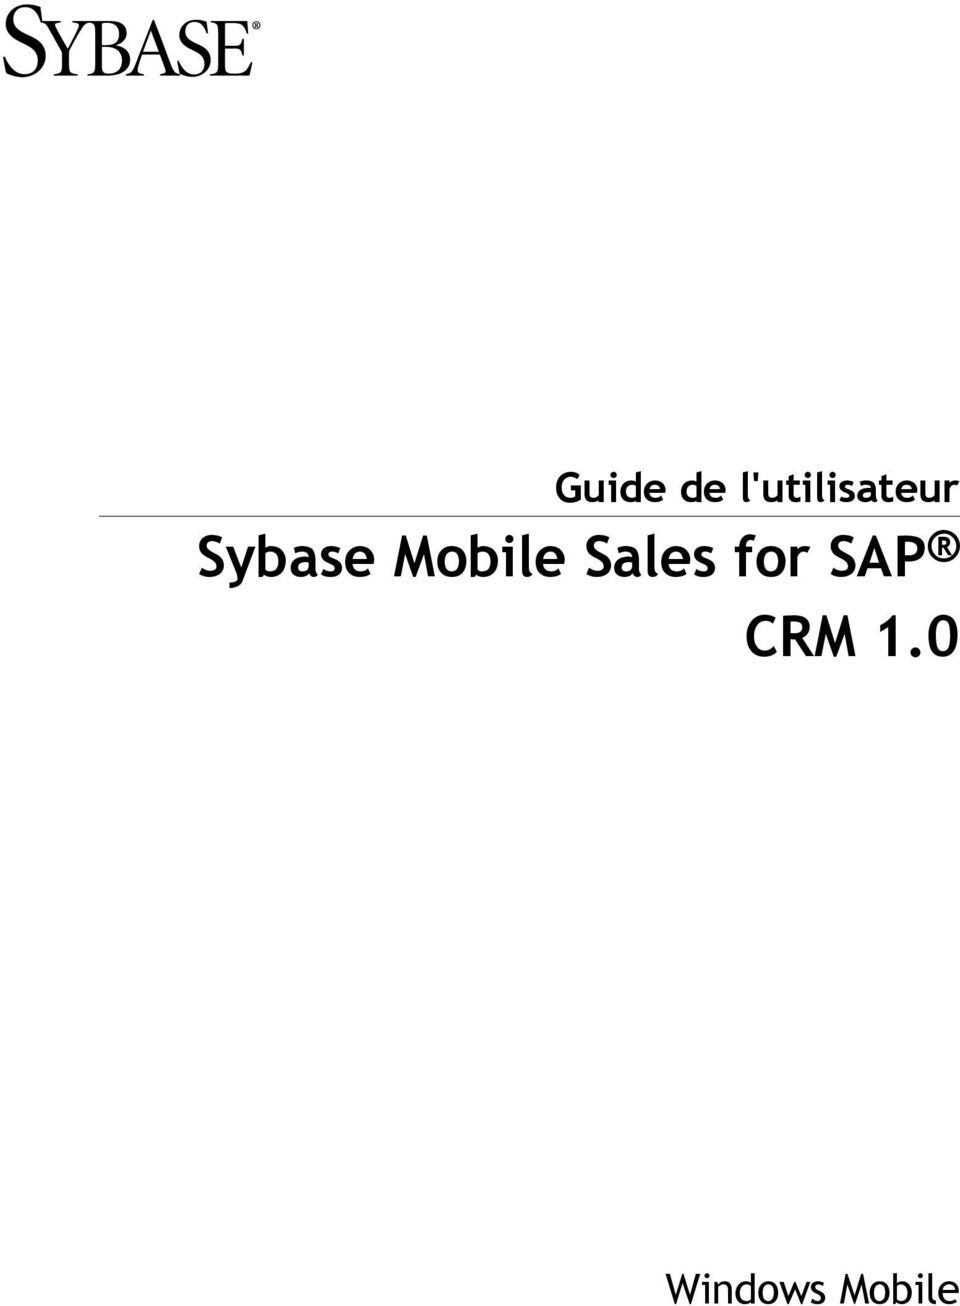 Sybase Mobile